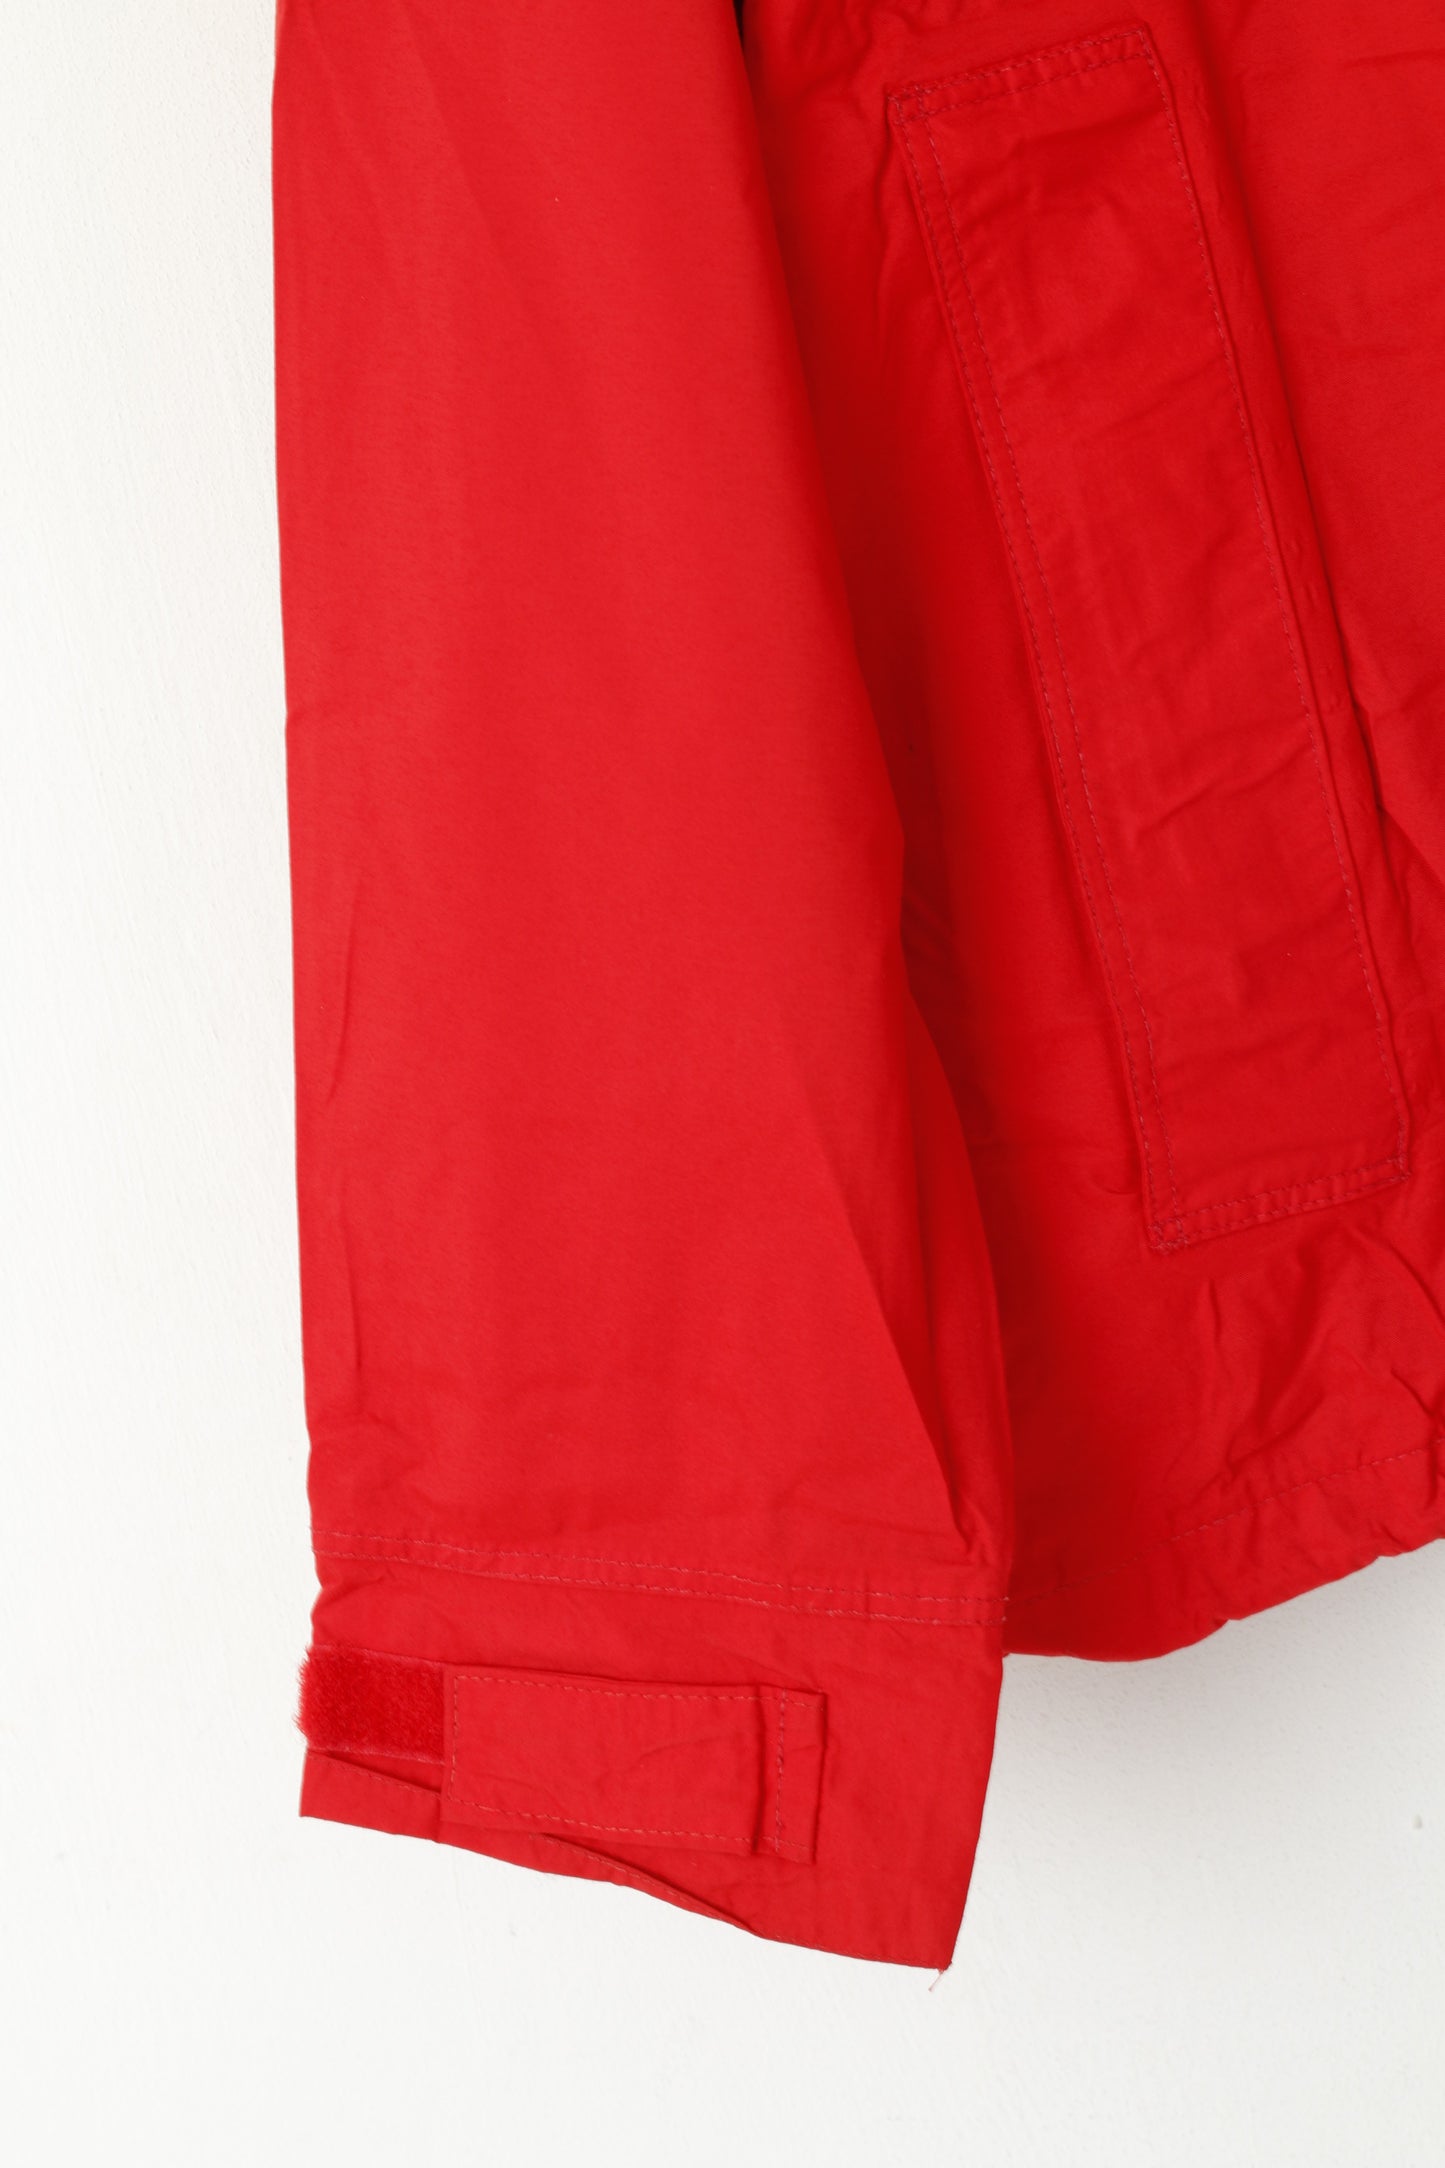 Helly Hansen Men S Jacket Red Vintage Lightweight Full Zipper Hooded Outdoor Unisex Top